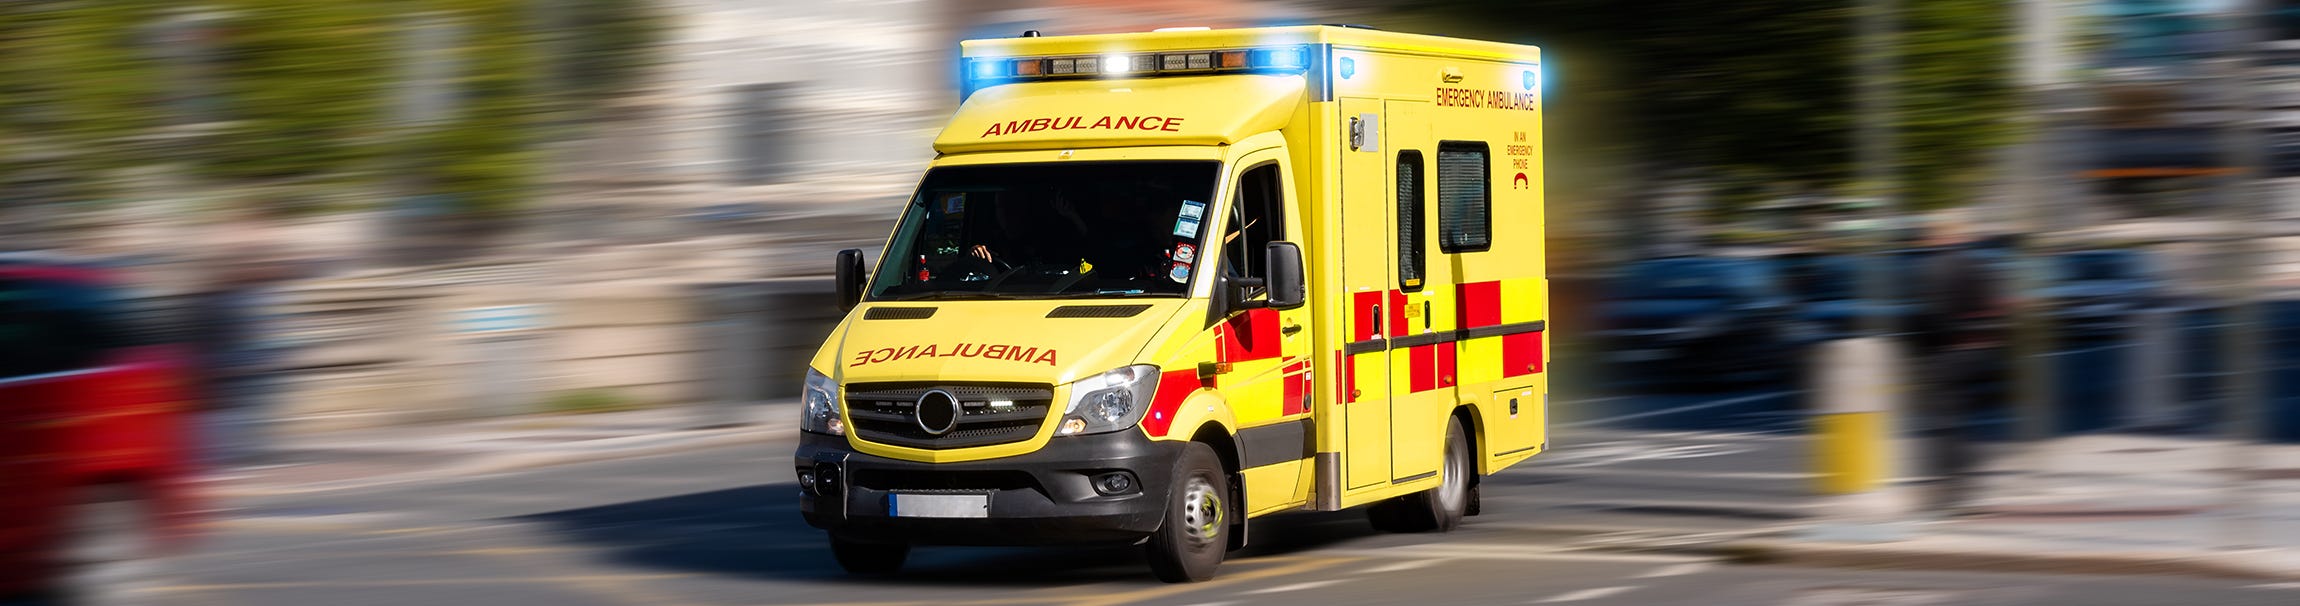 Image of an ambulance speeding through a blurred street scape